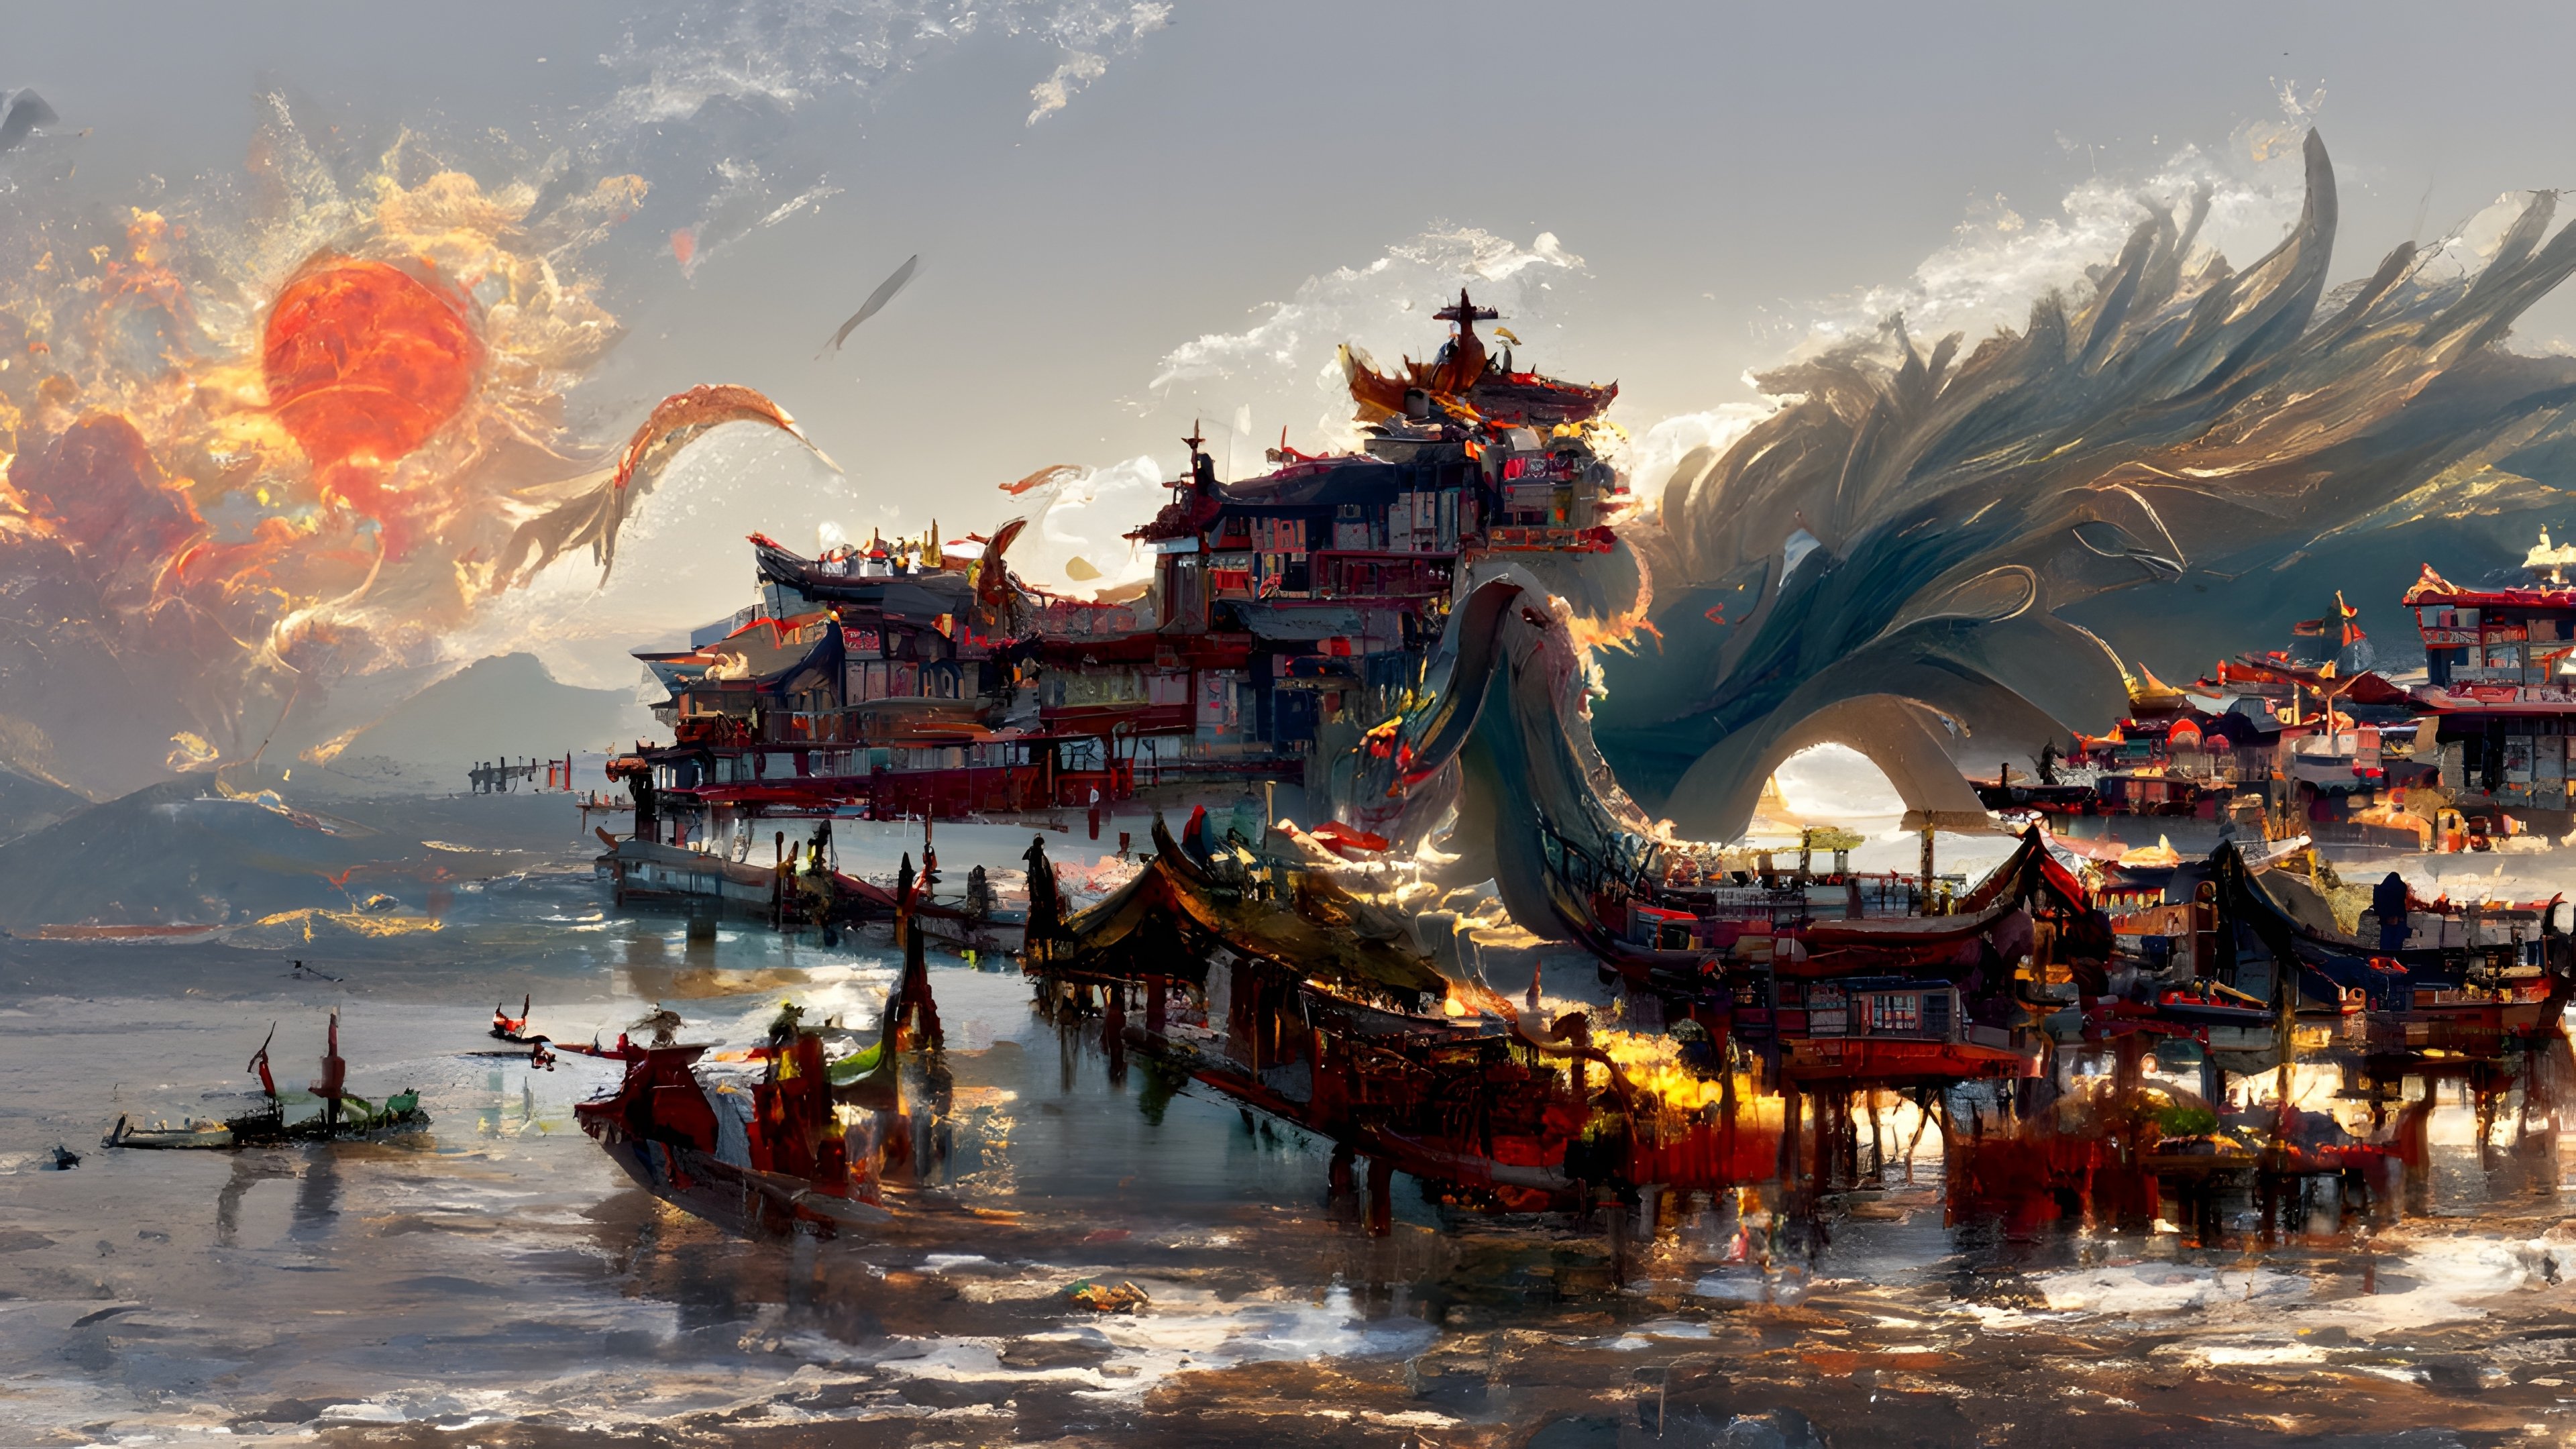 Download wallpaper 3840x2160 china's ancient town, dragon, fantasy, art 4k wallpaper, uhd wallpaper, 16:9 widescreen 3840x2160 HD background, 27877